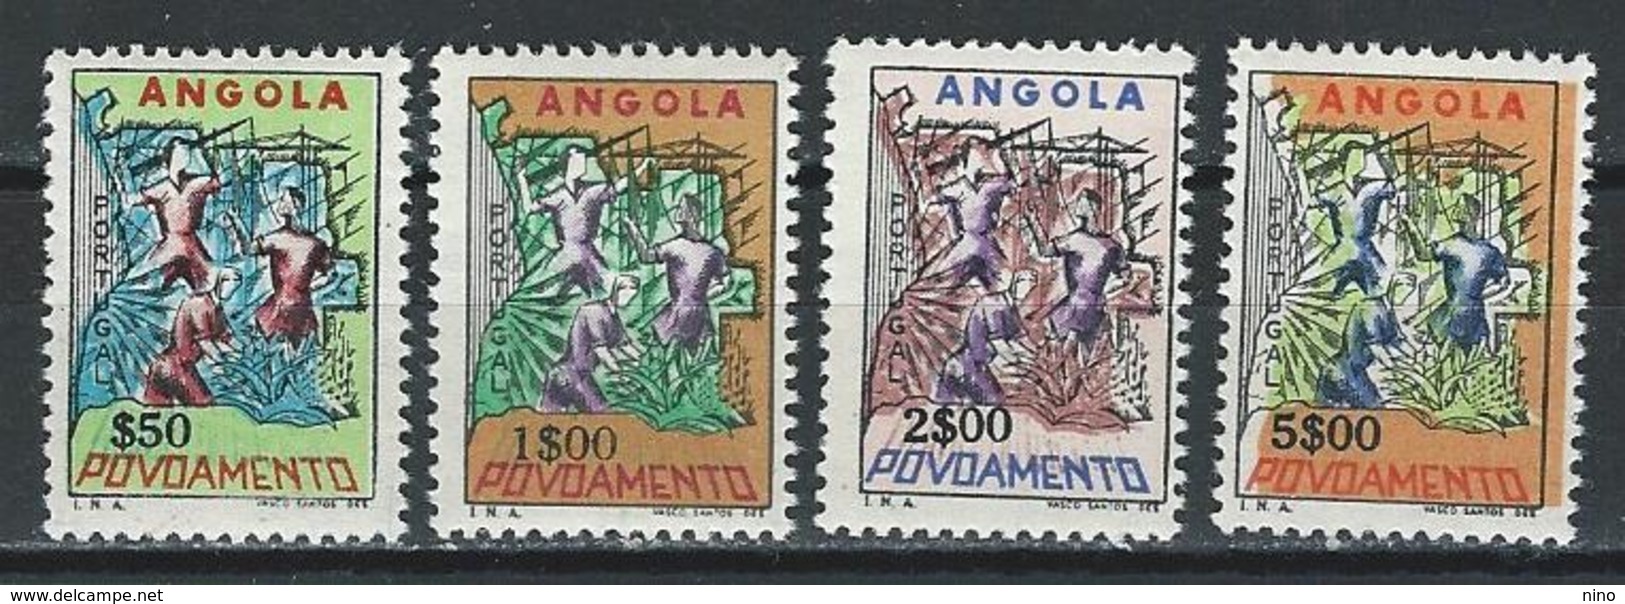 Angola. Scott # RA22-25 MNH. Postal Tax Stamps. 1965 - Angola